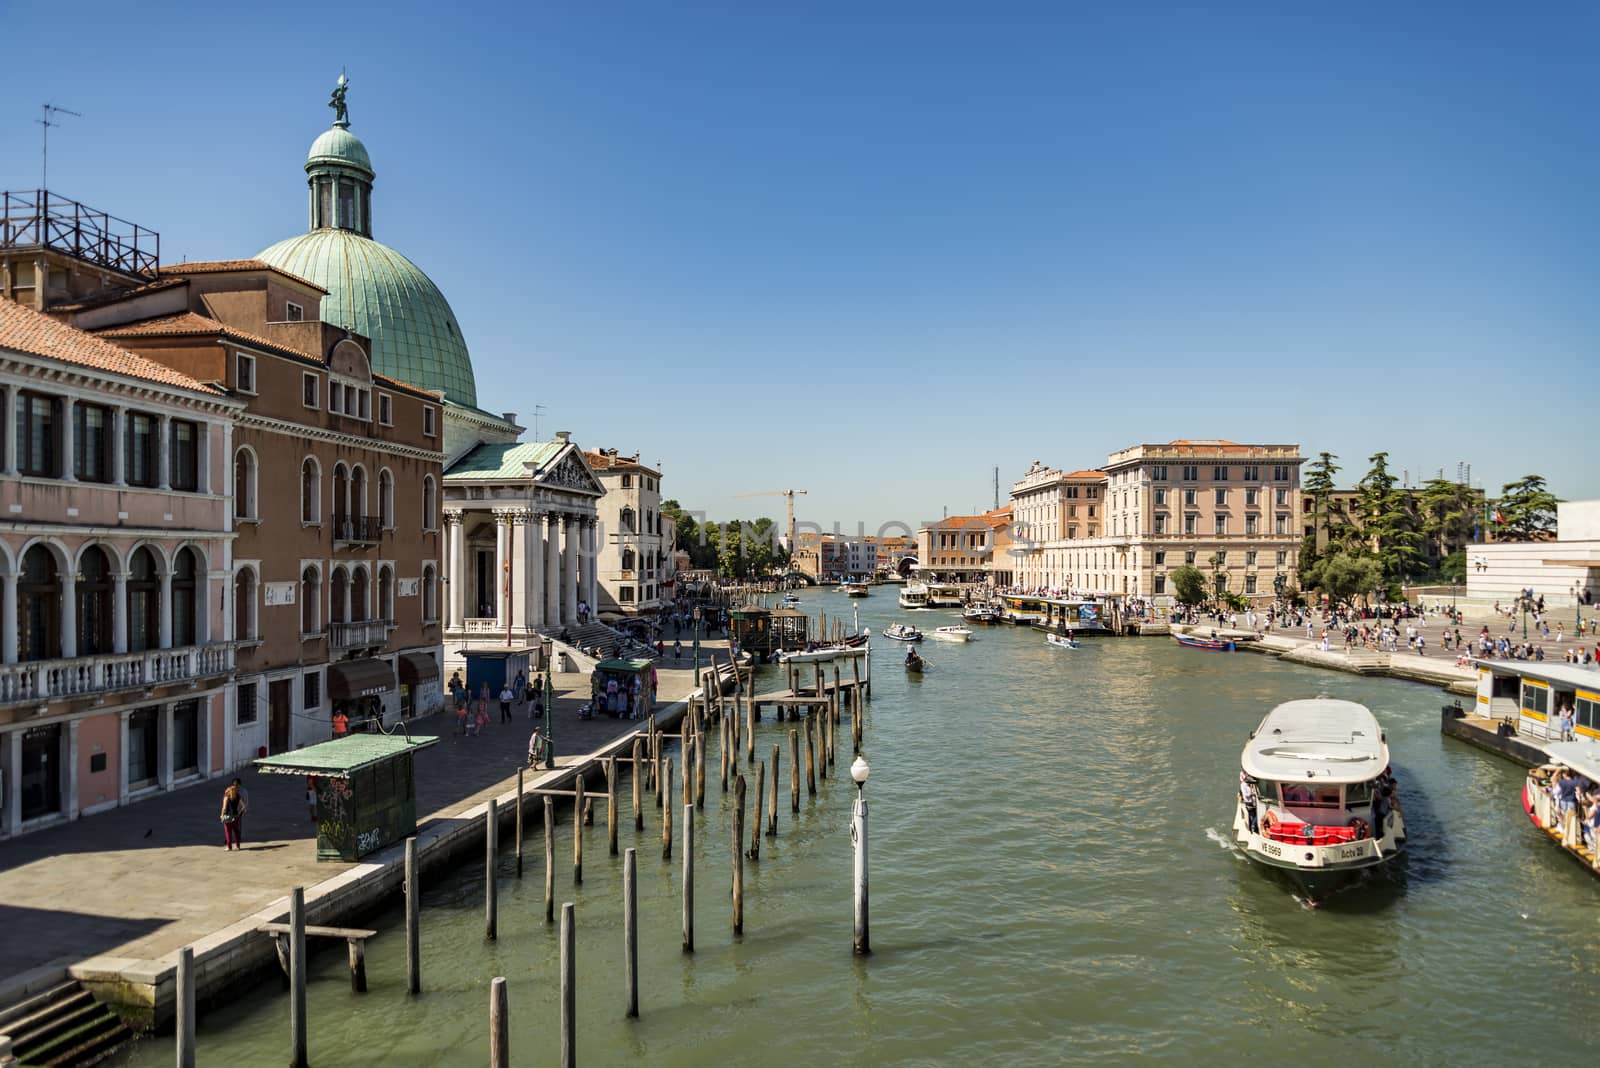 VENICE - JULY 1: Grand Canal and Basilica Santa Maria della Salute on July 1, 2017 in Venice, Italy